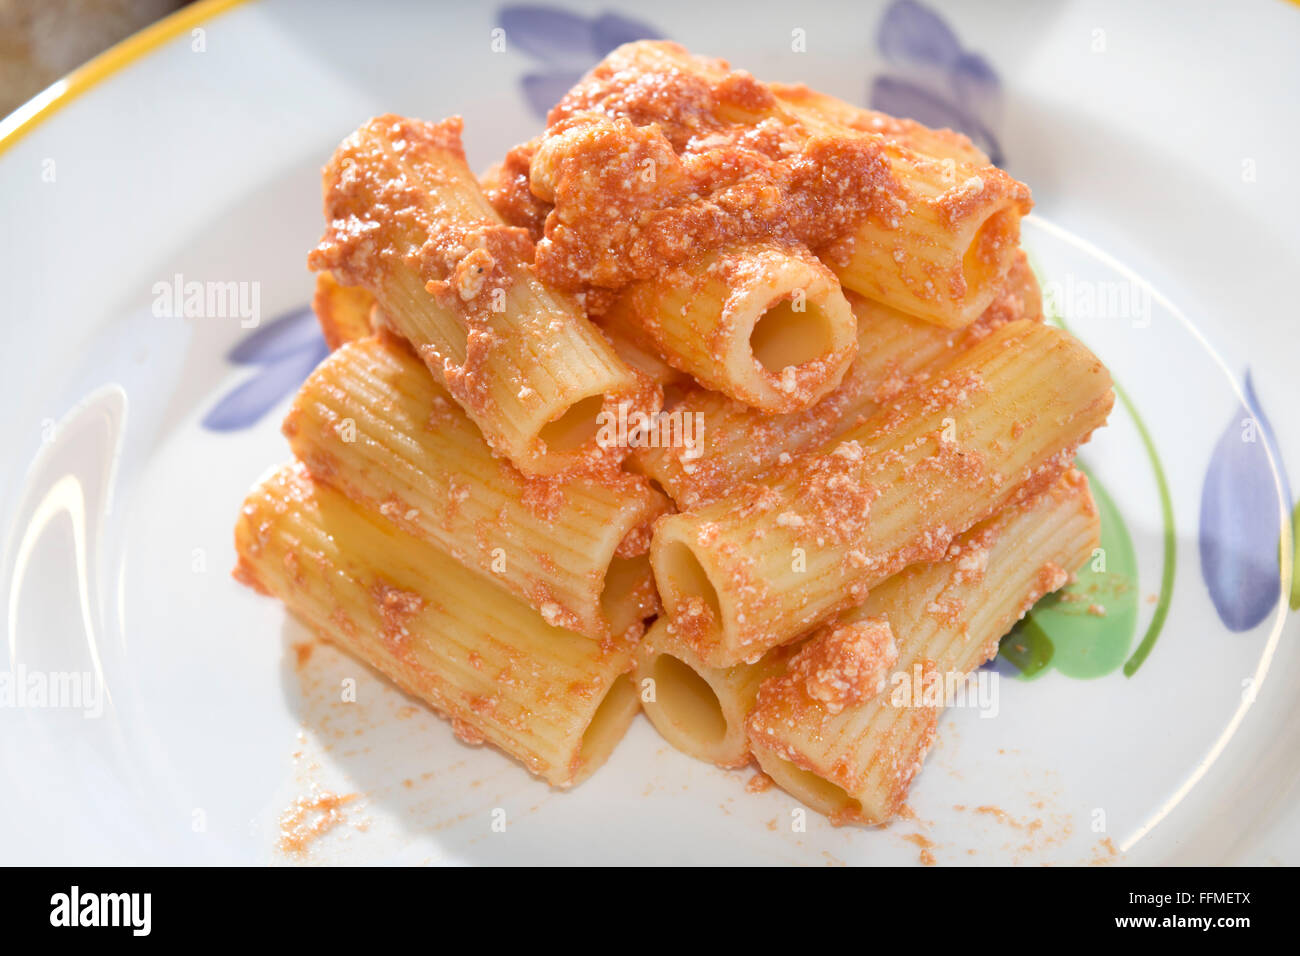 rigatoni with tomato sauce and ricotta cheese Stock Photo